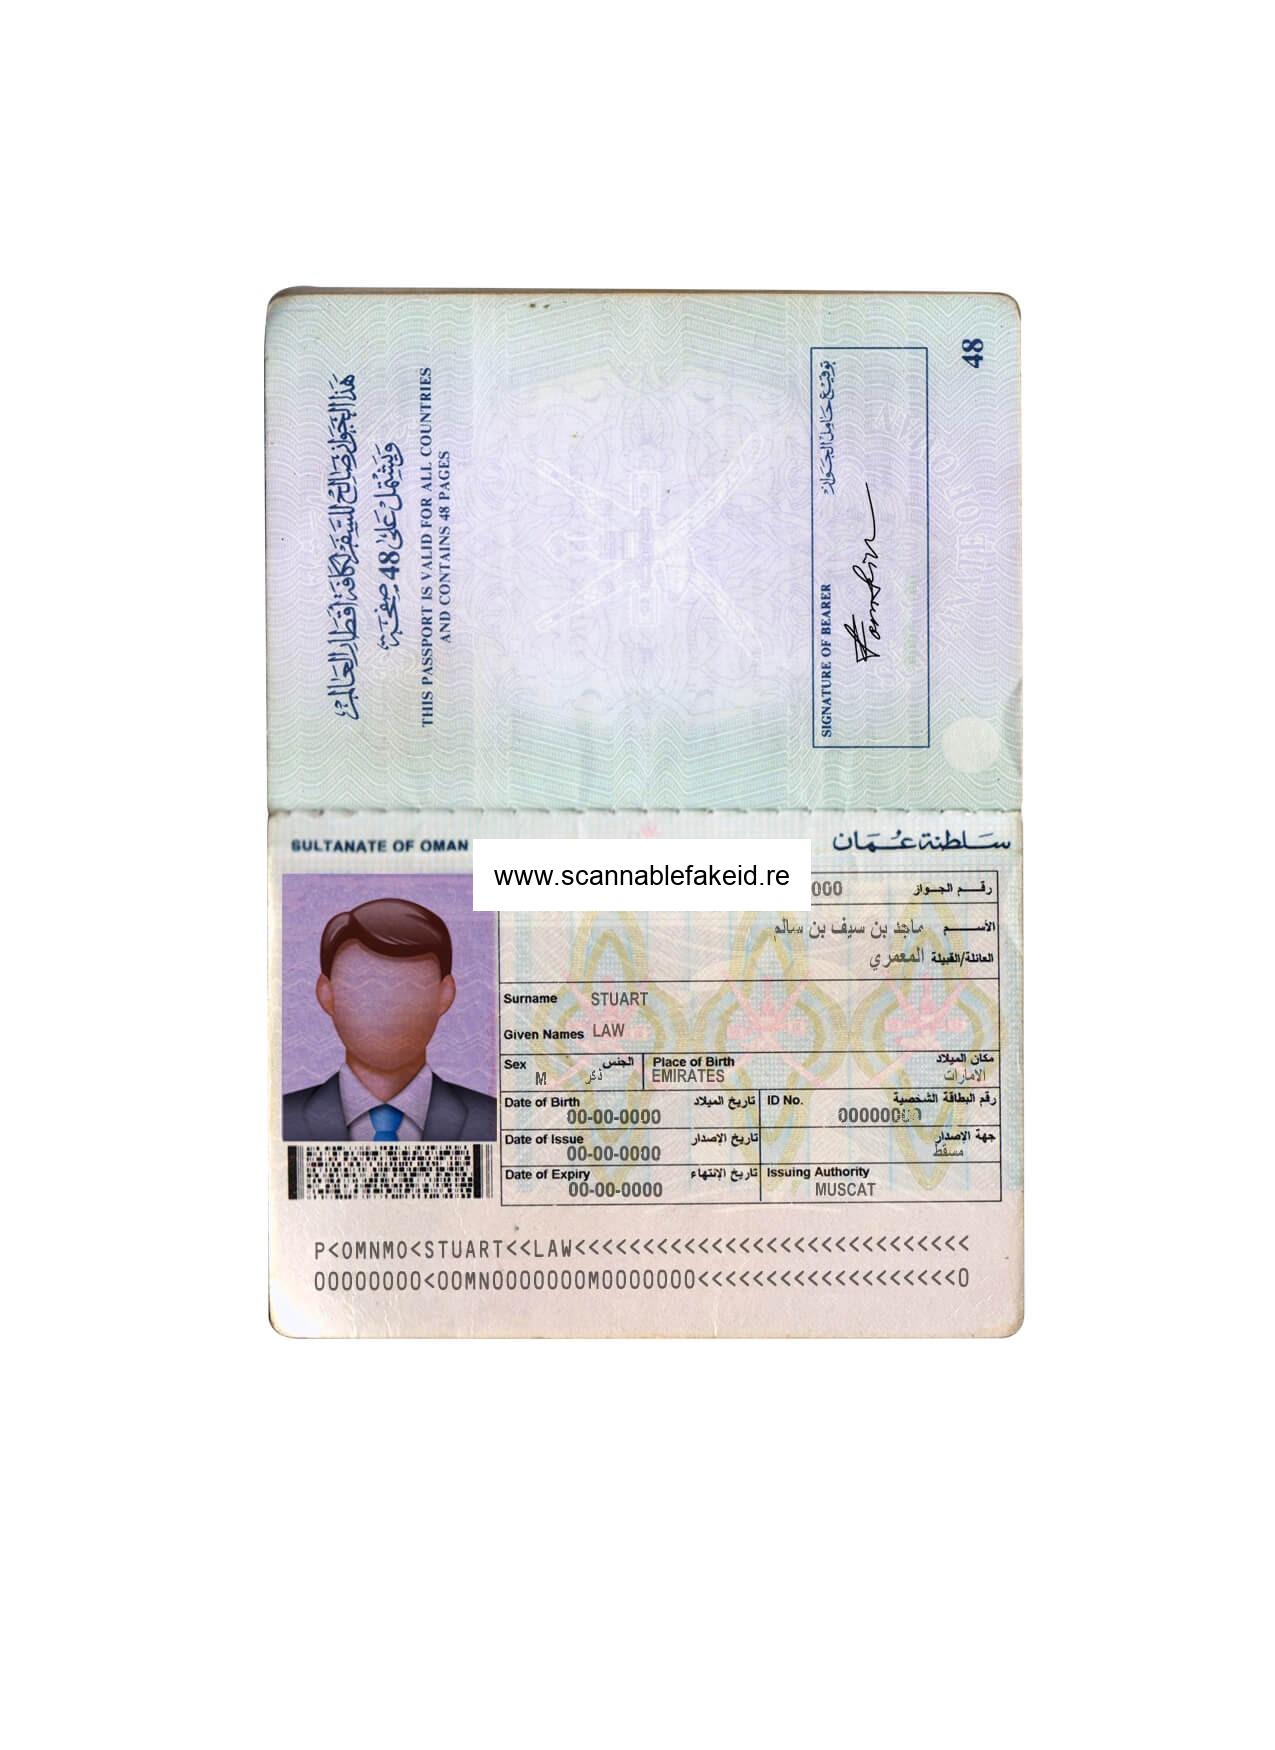 Netherlands Fake Passport - Buy Scannable Fake Id Online - Fake ID Website